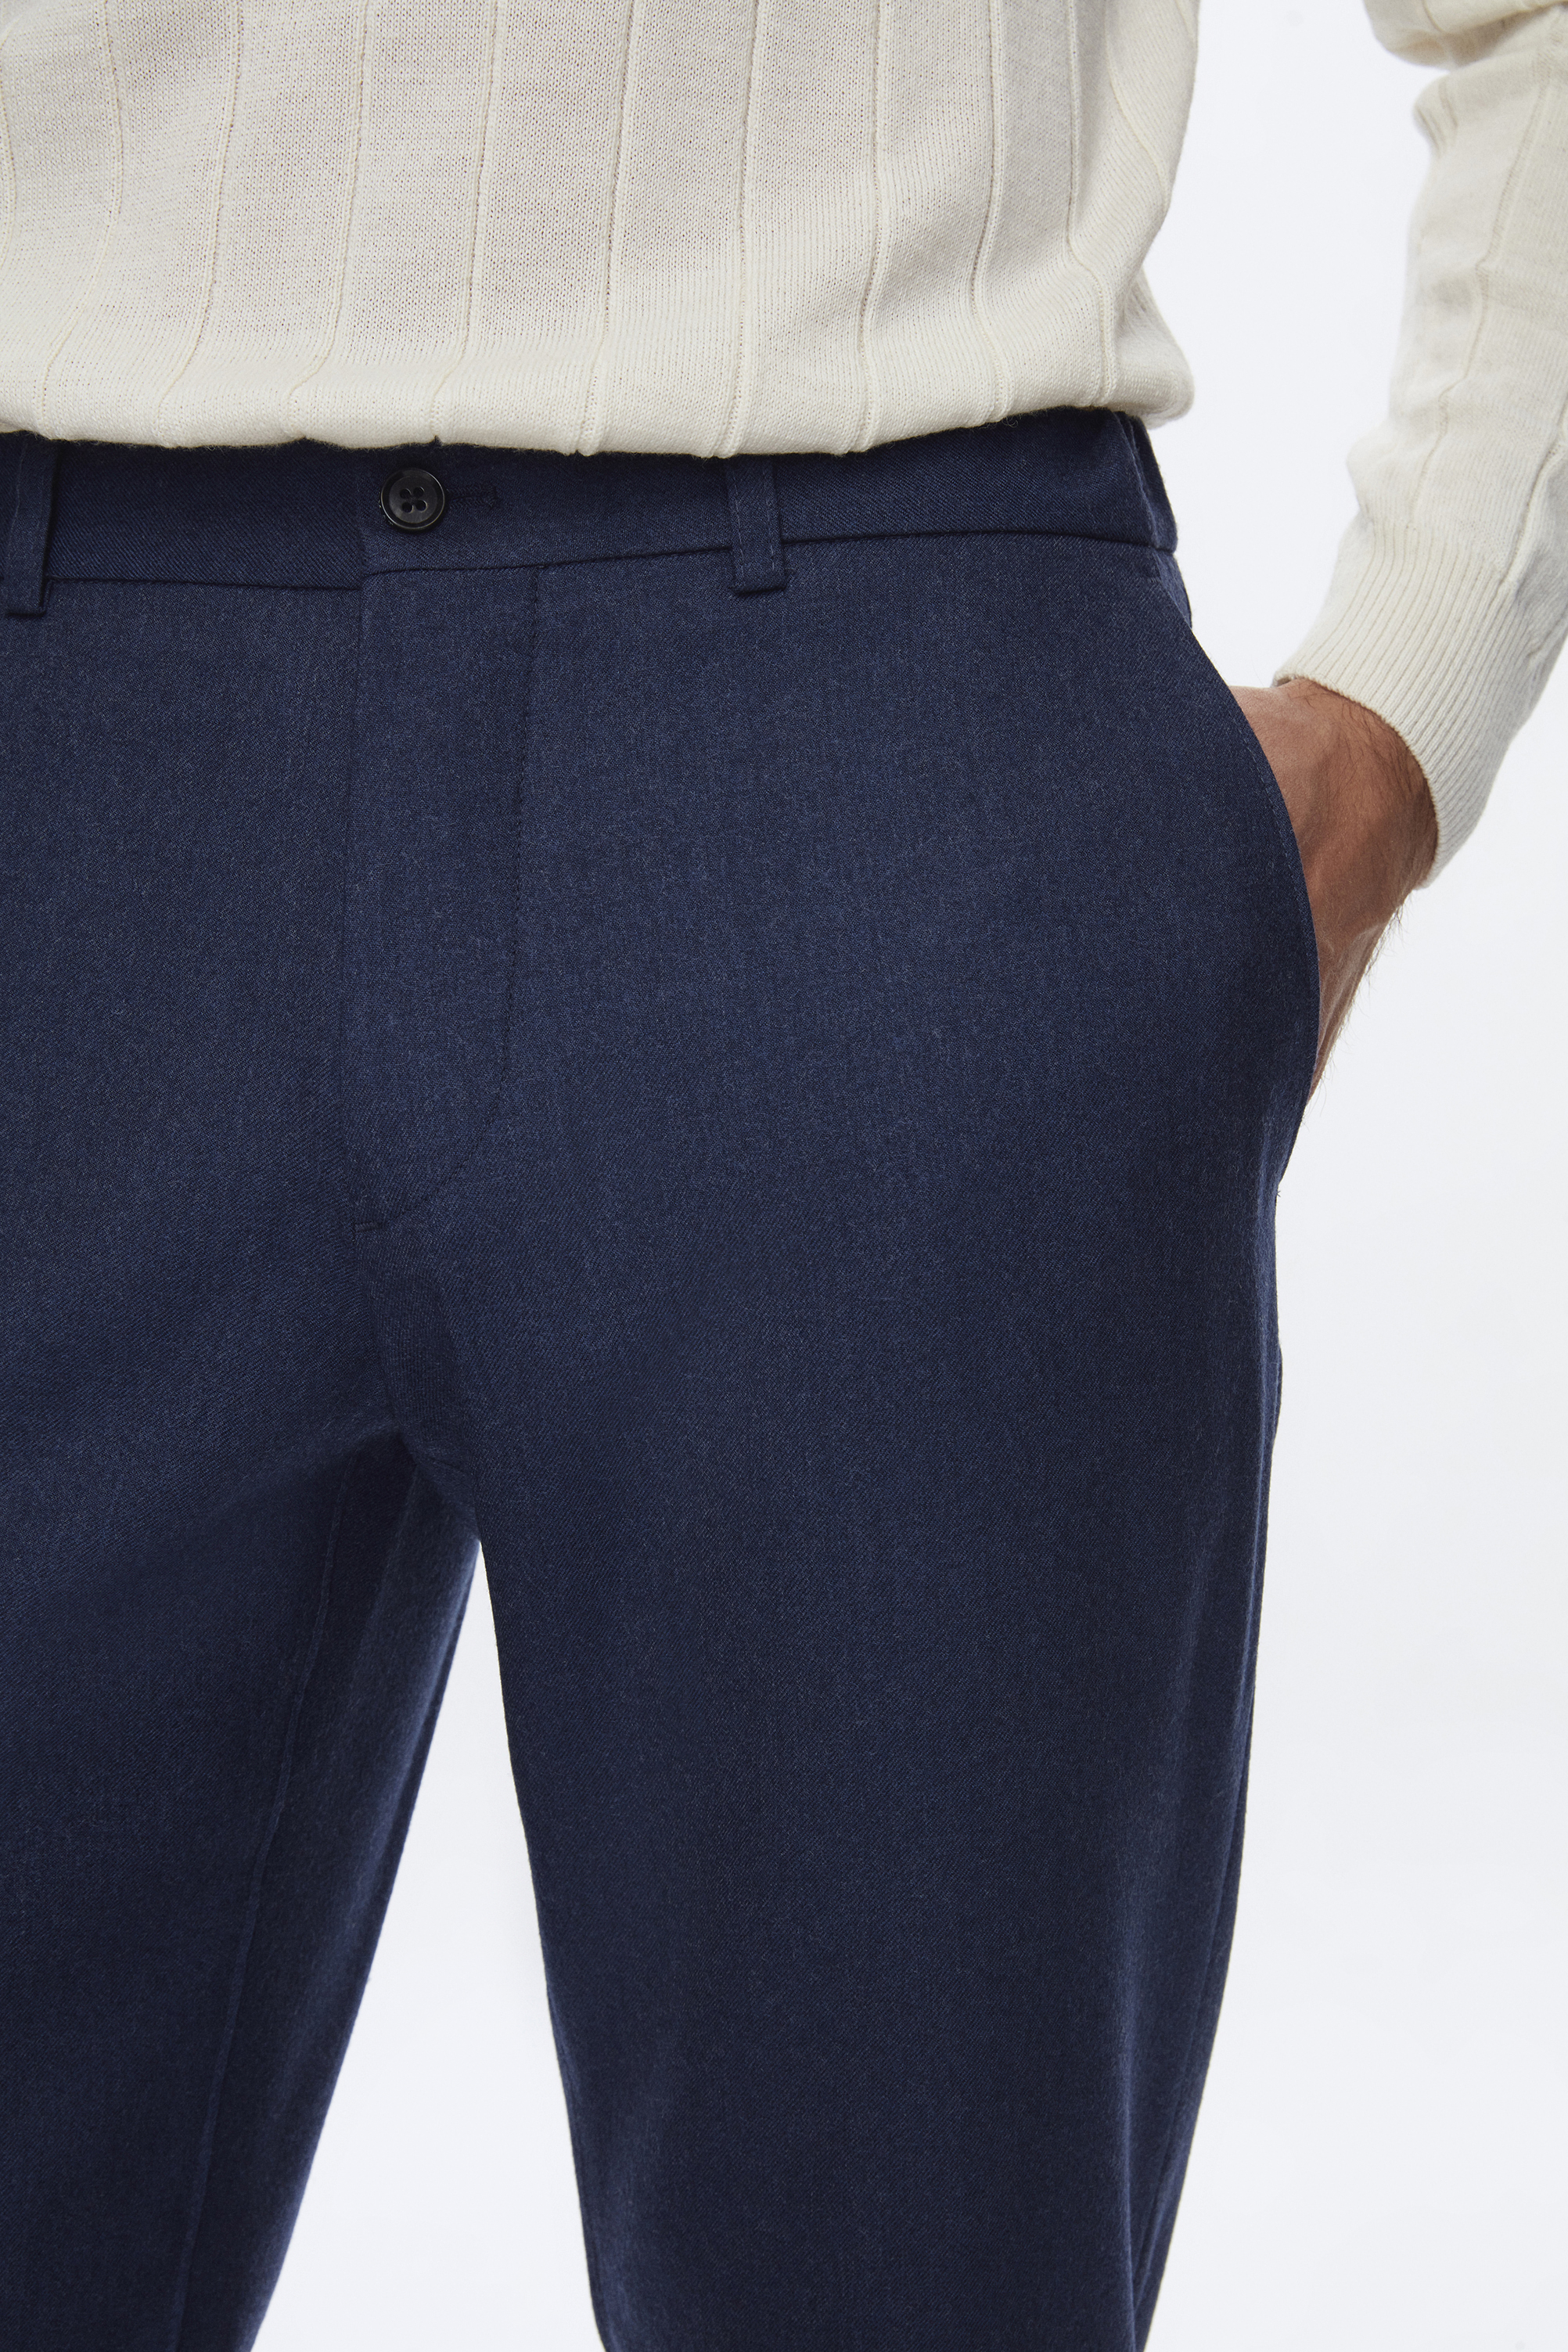 Damat Tween Damat Slim Fit Lacivert Düz Chino Pantolon. 2